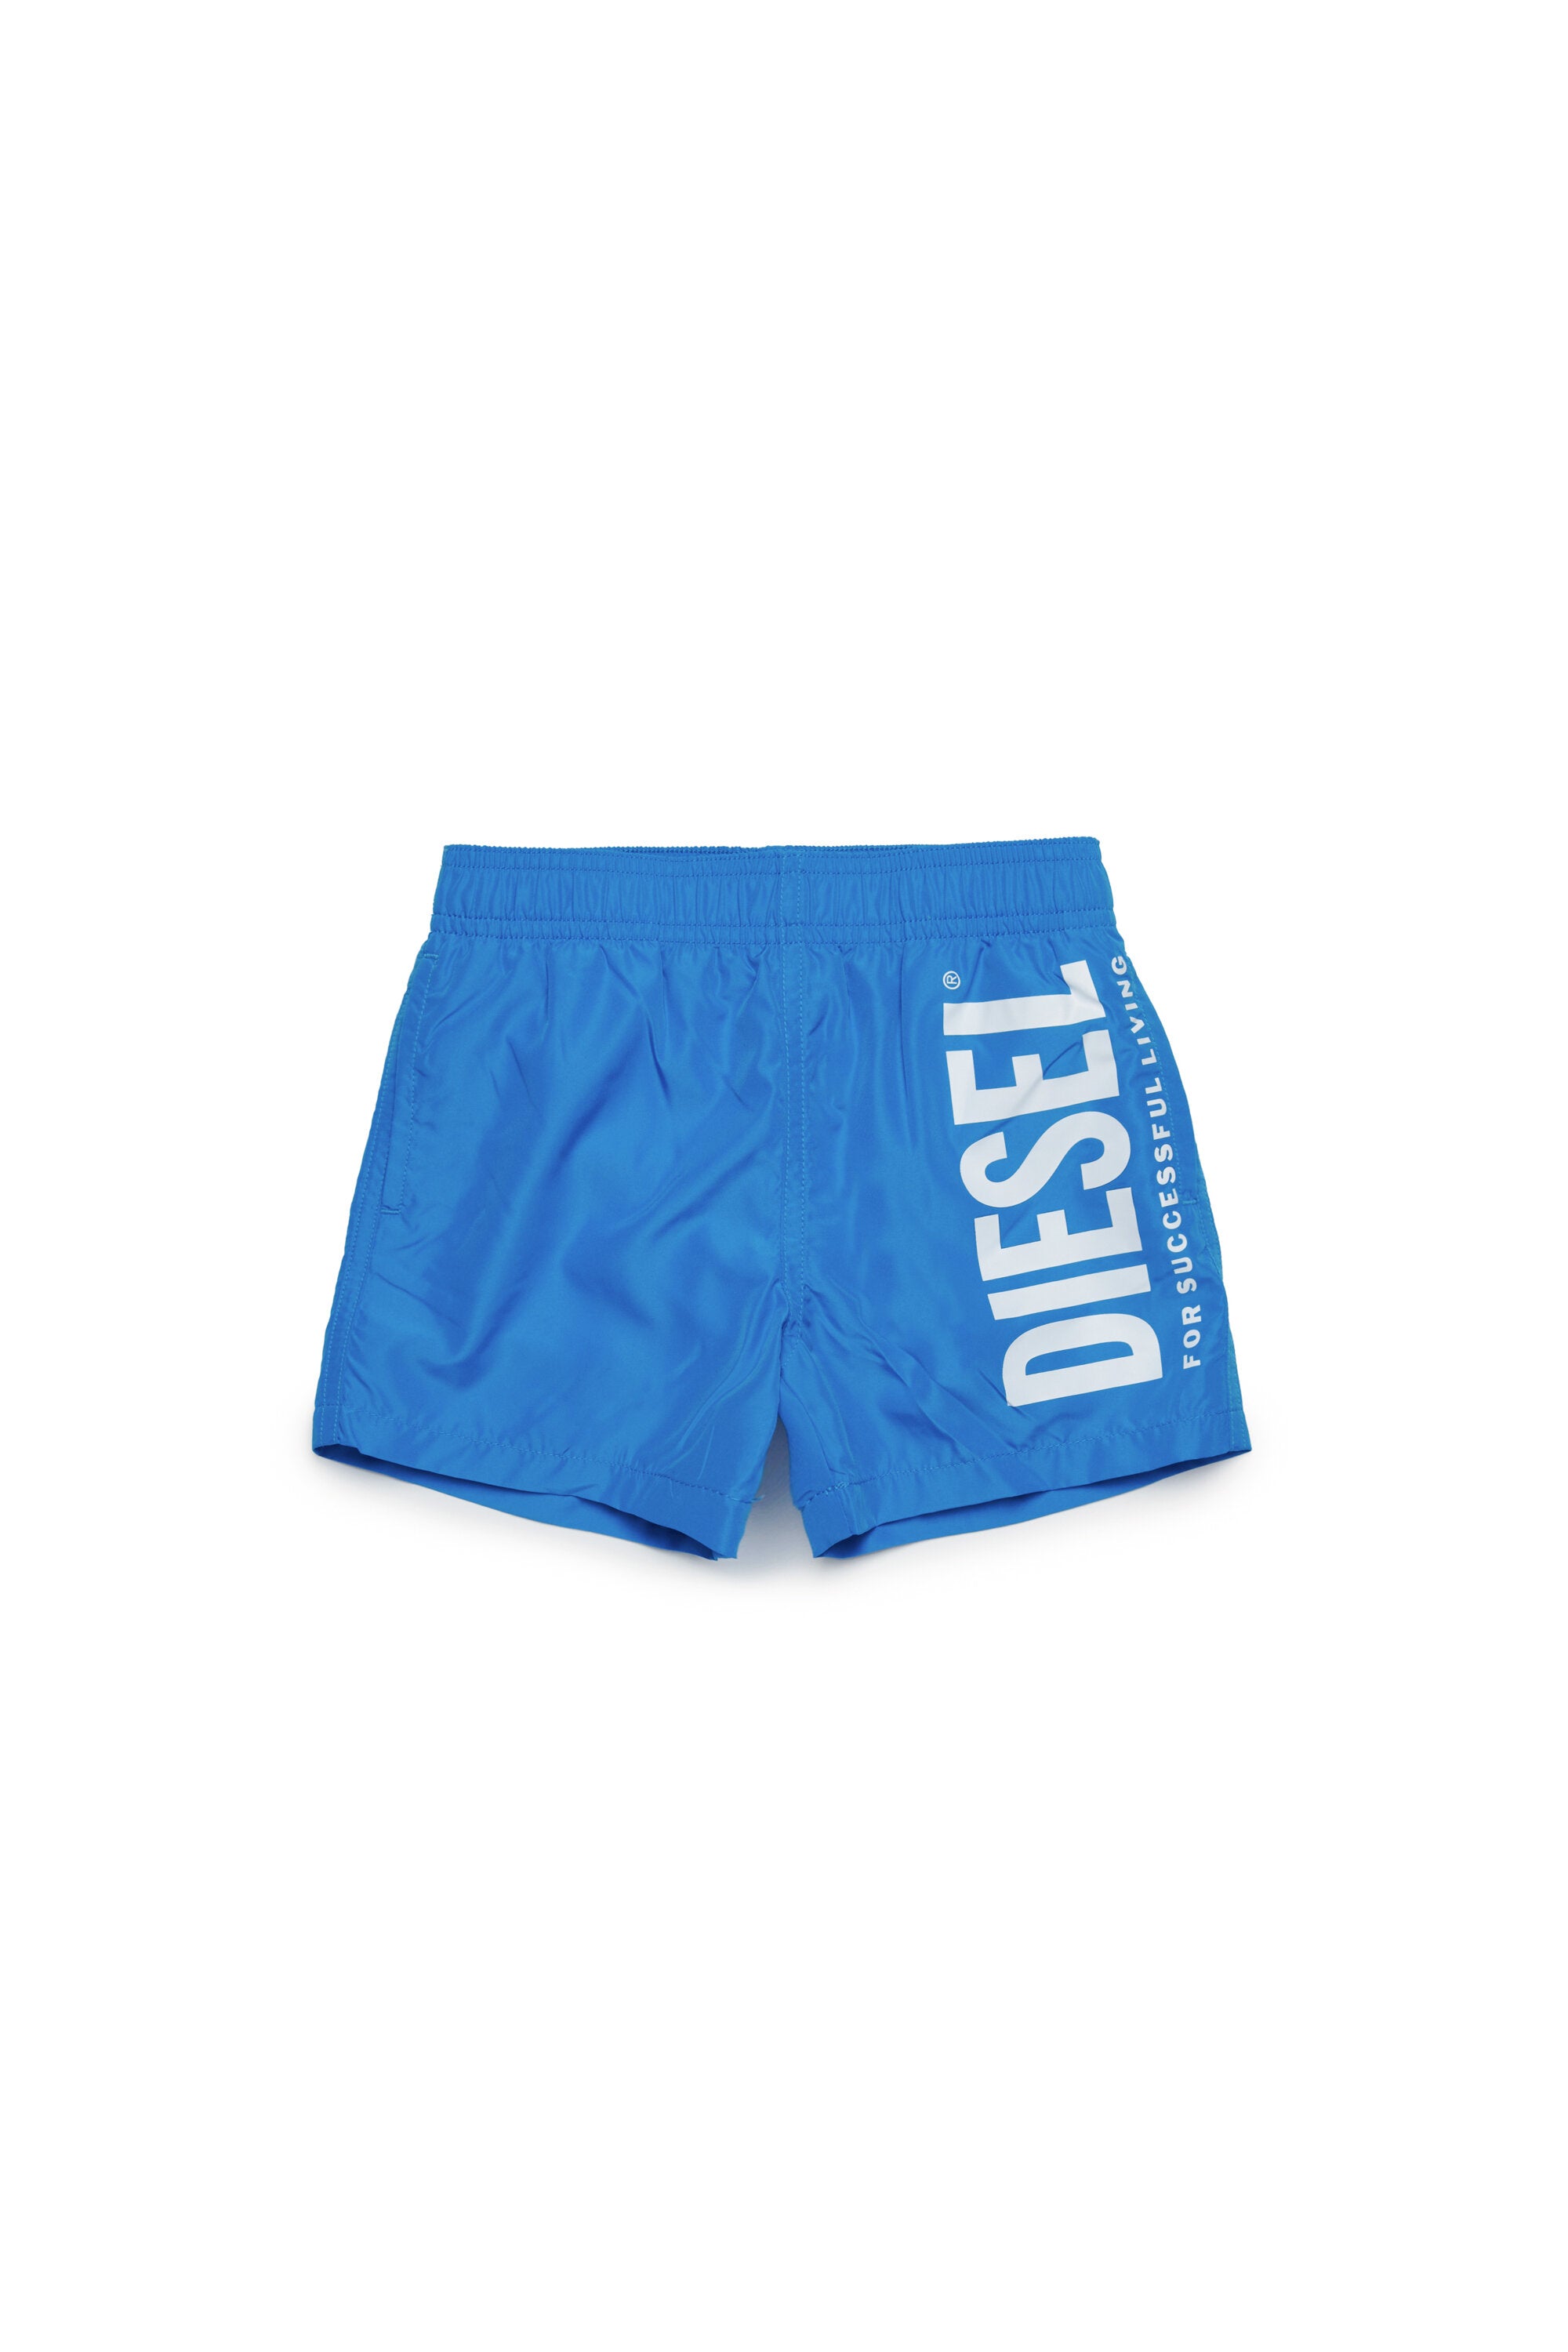 Branded boxer swimsuit